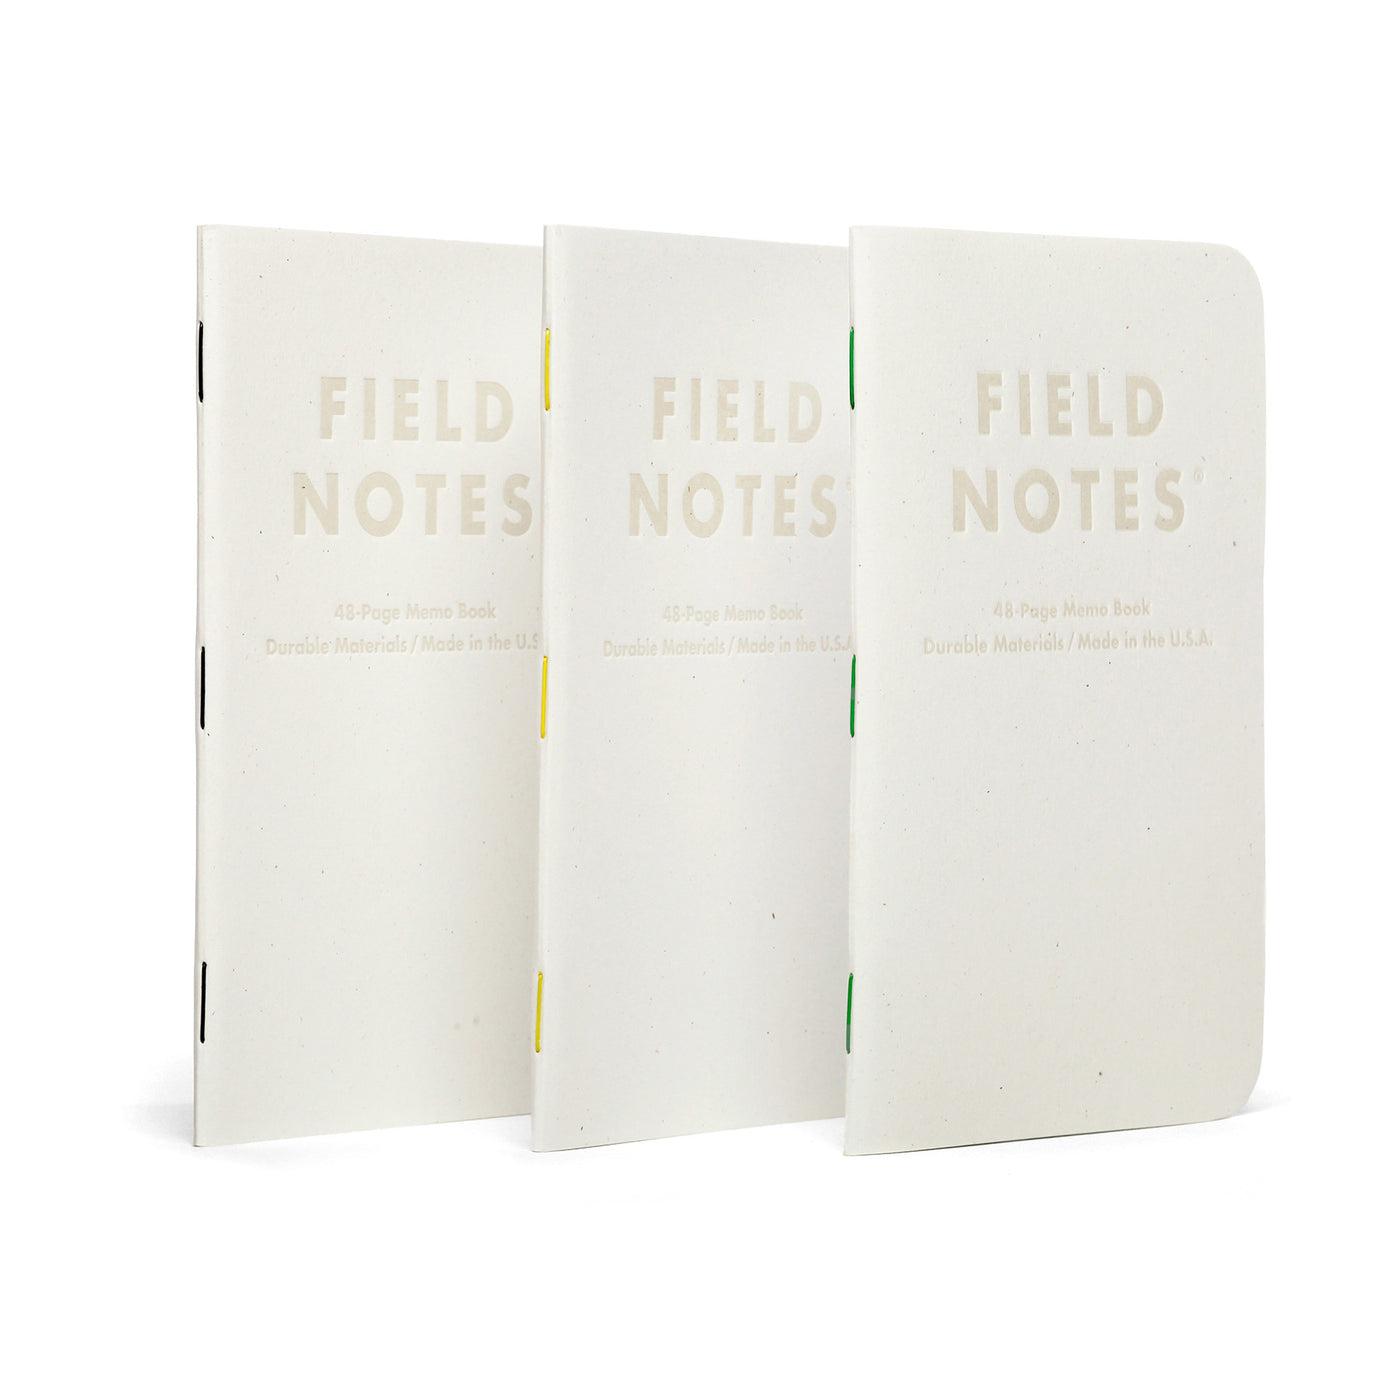 Field Notes Quarterly Edition - Birch Bark (Special Edition)